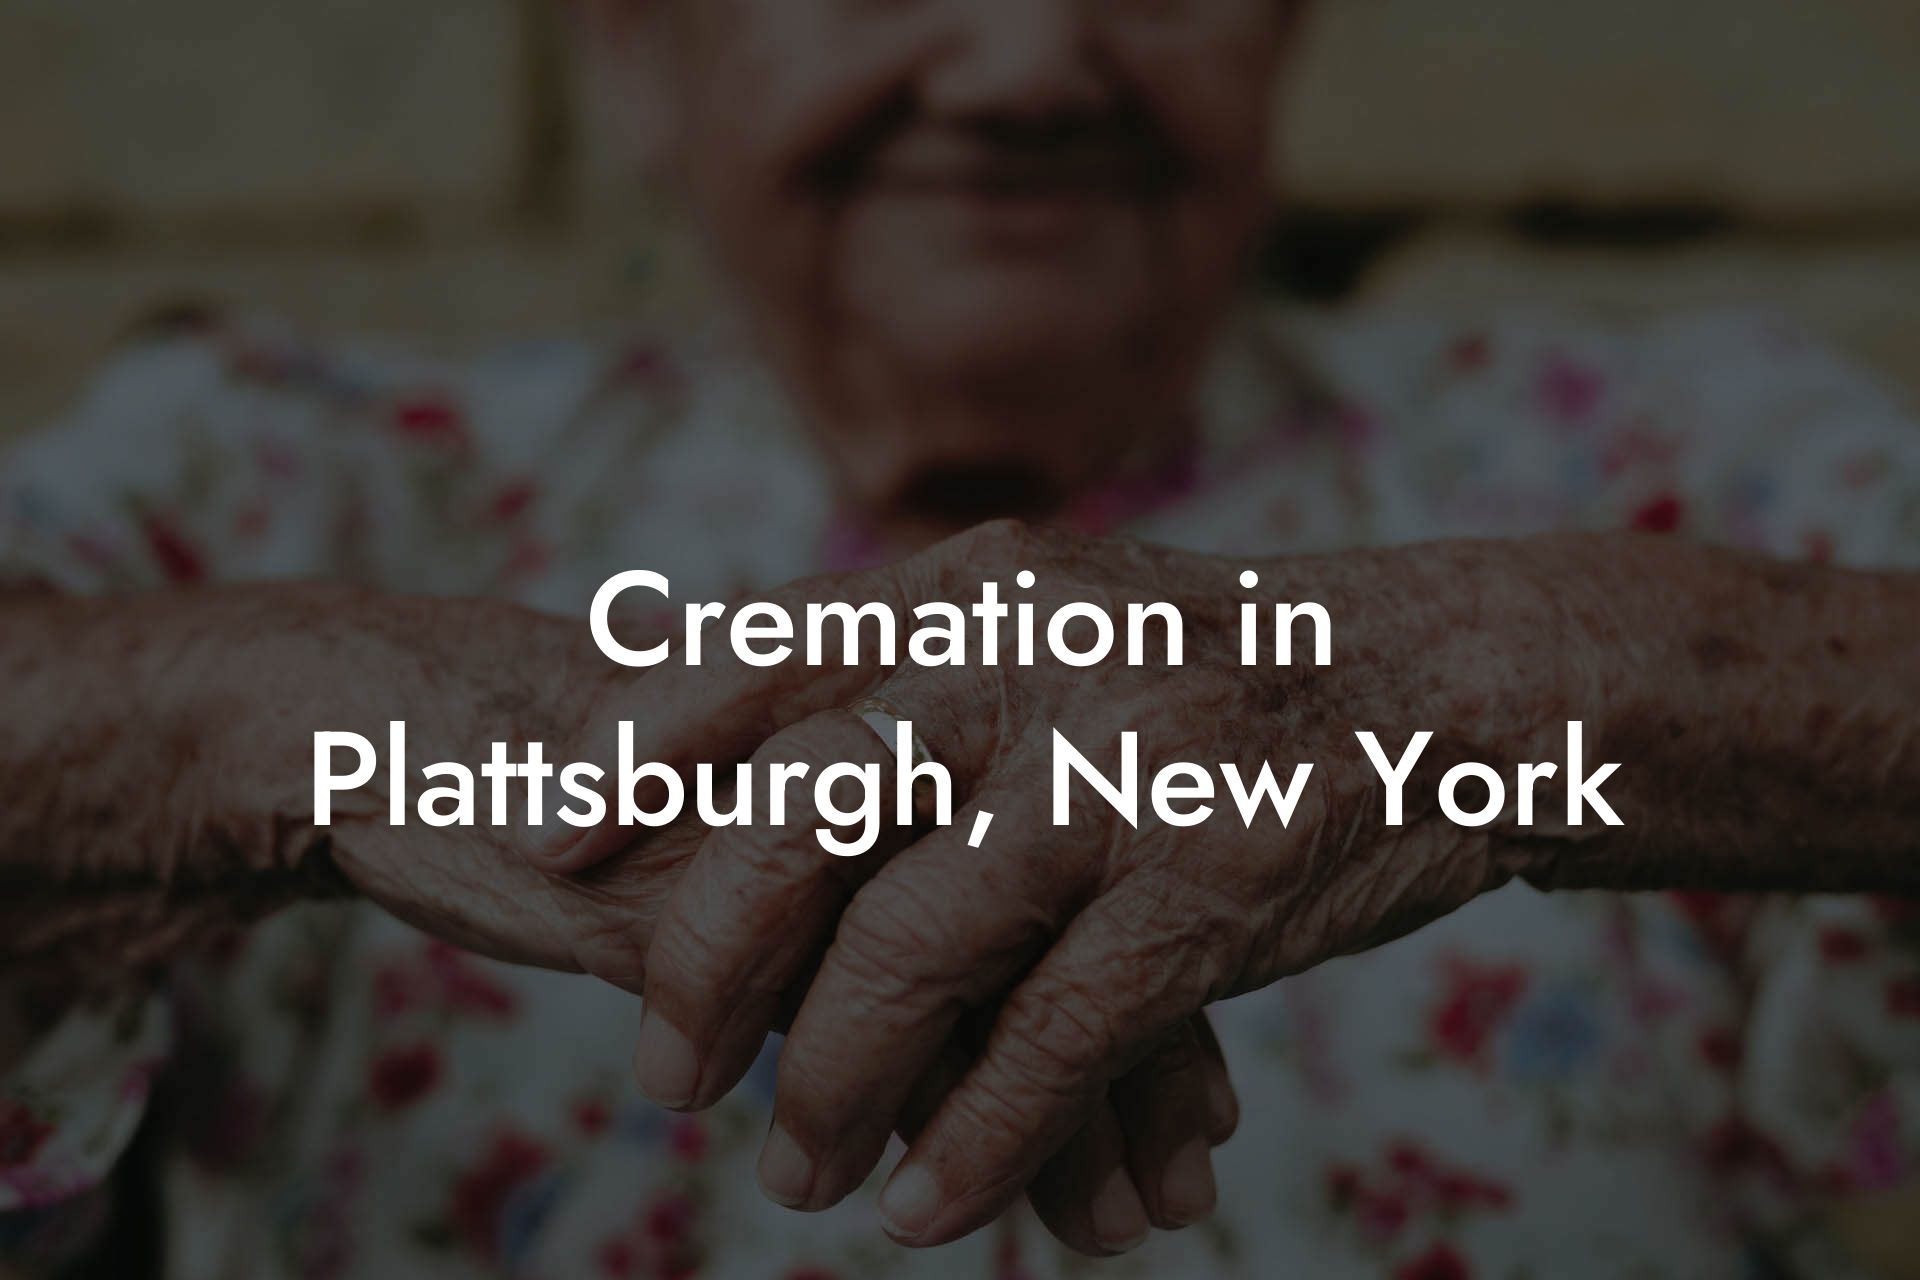 Cremation in Plattsburgh, New York